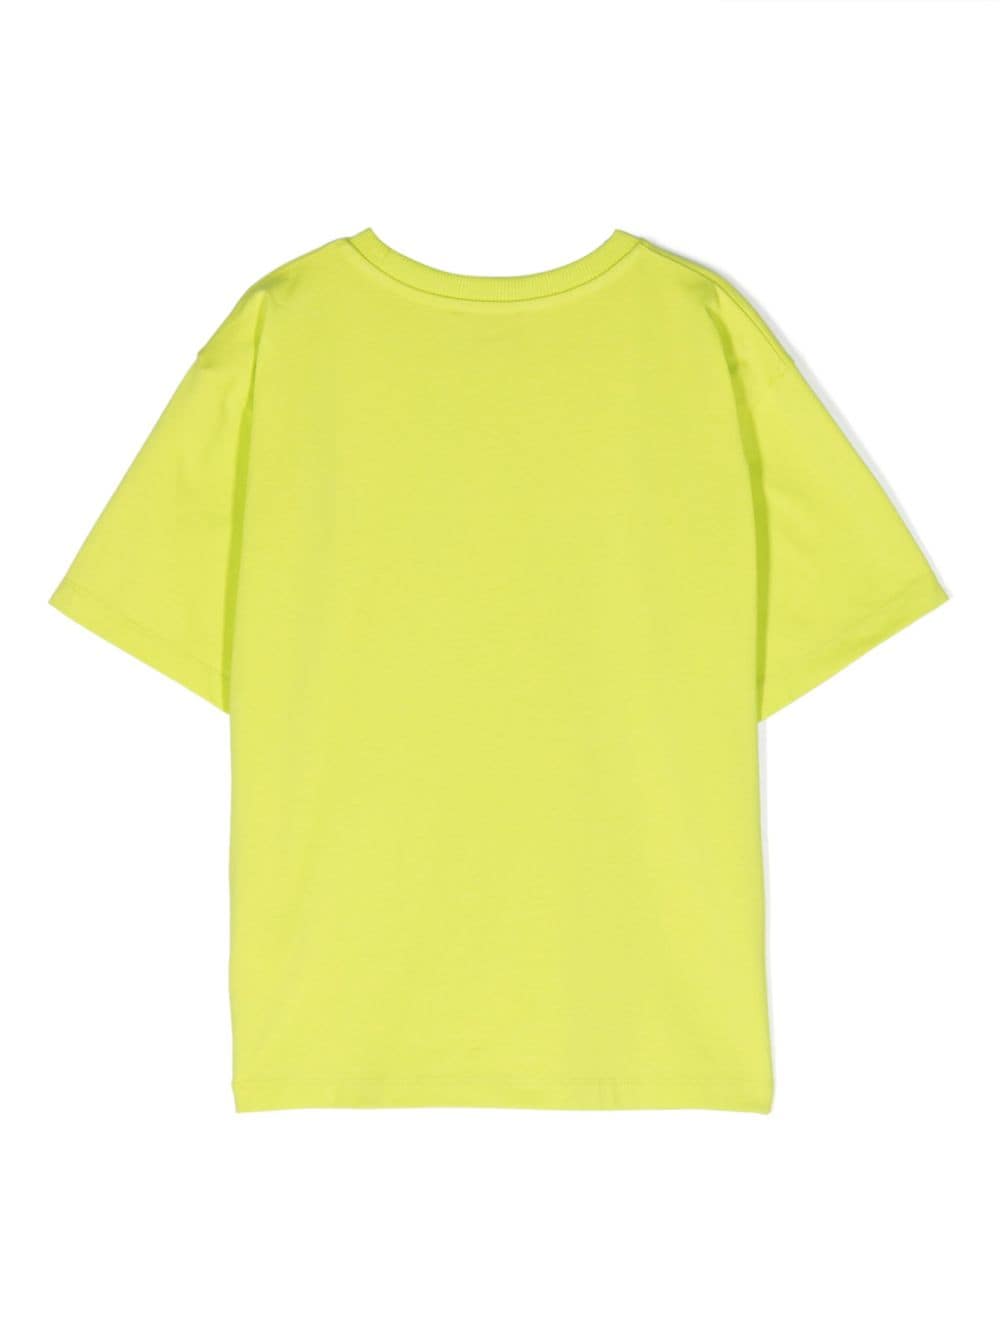 T-shirt bambina lime/multicolore